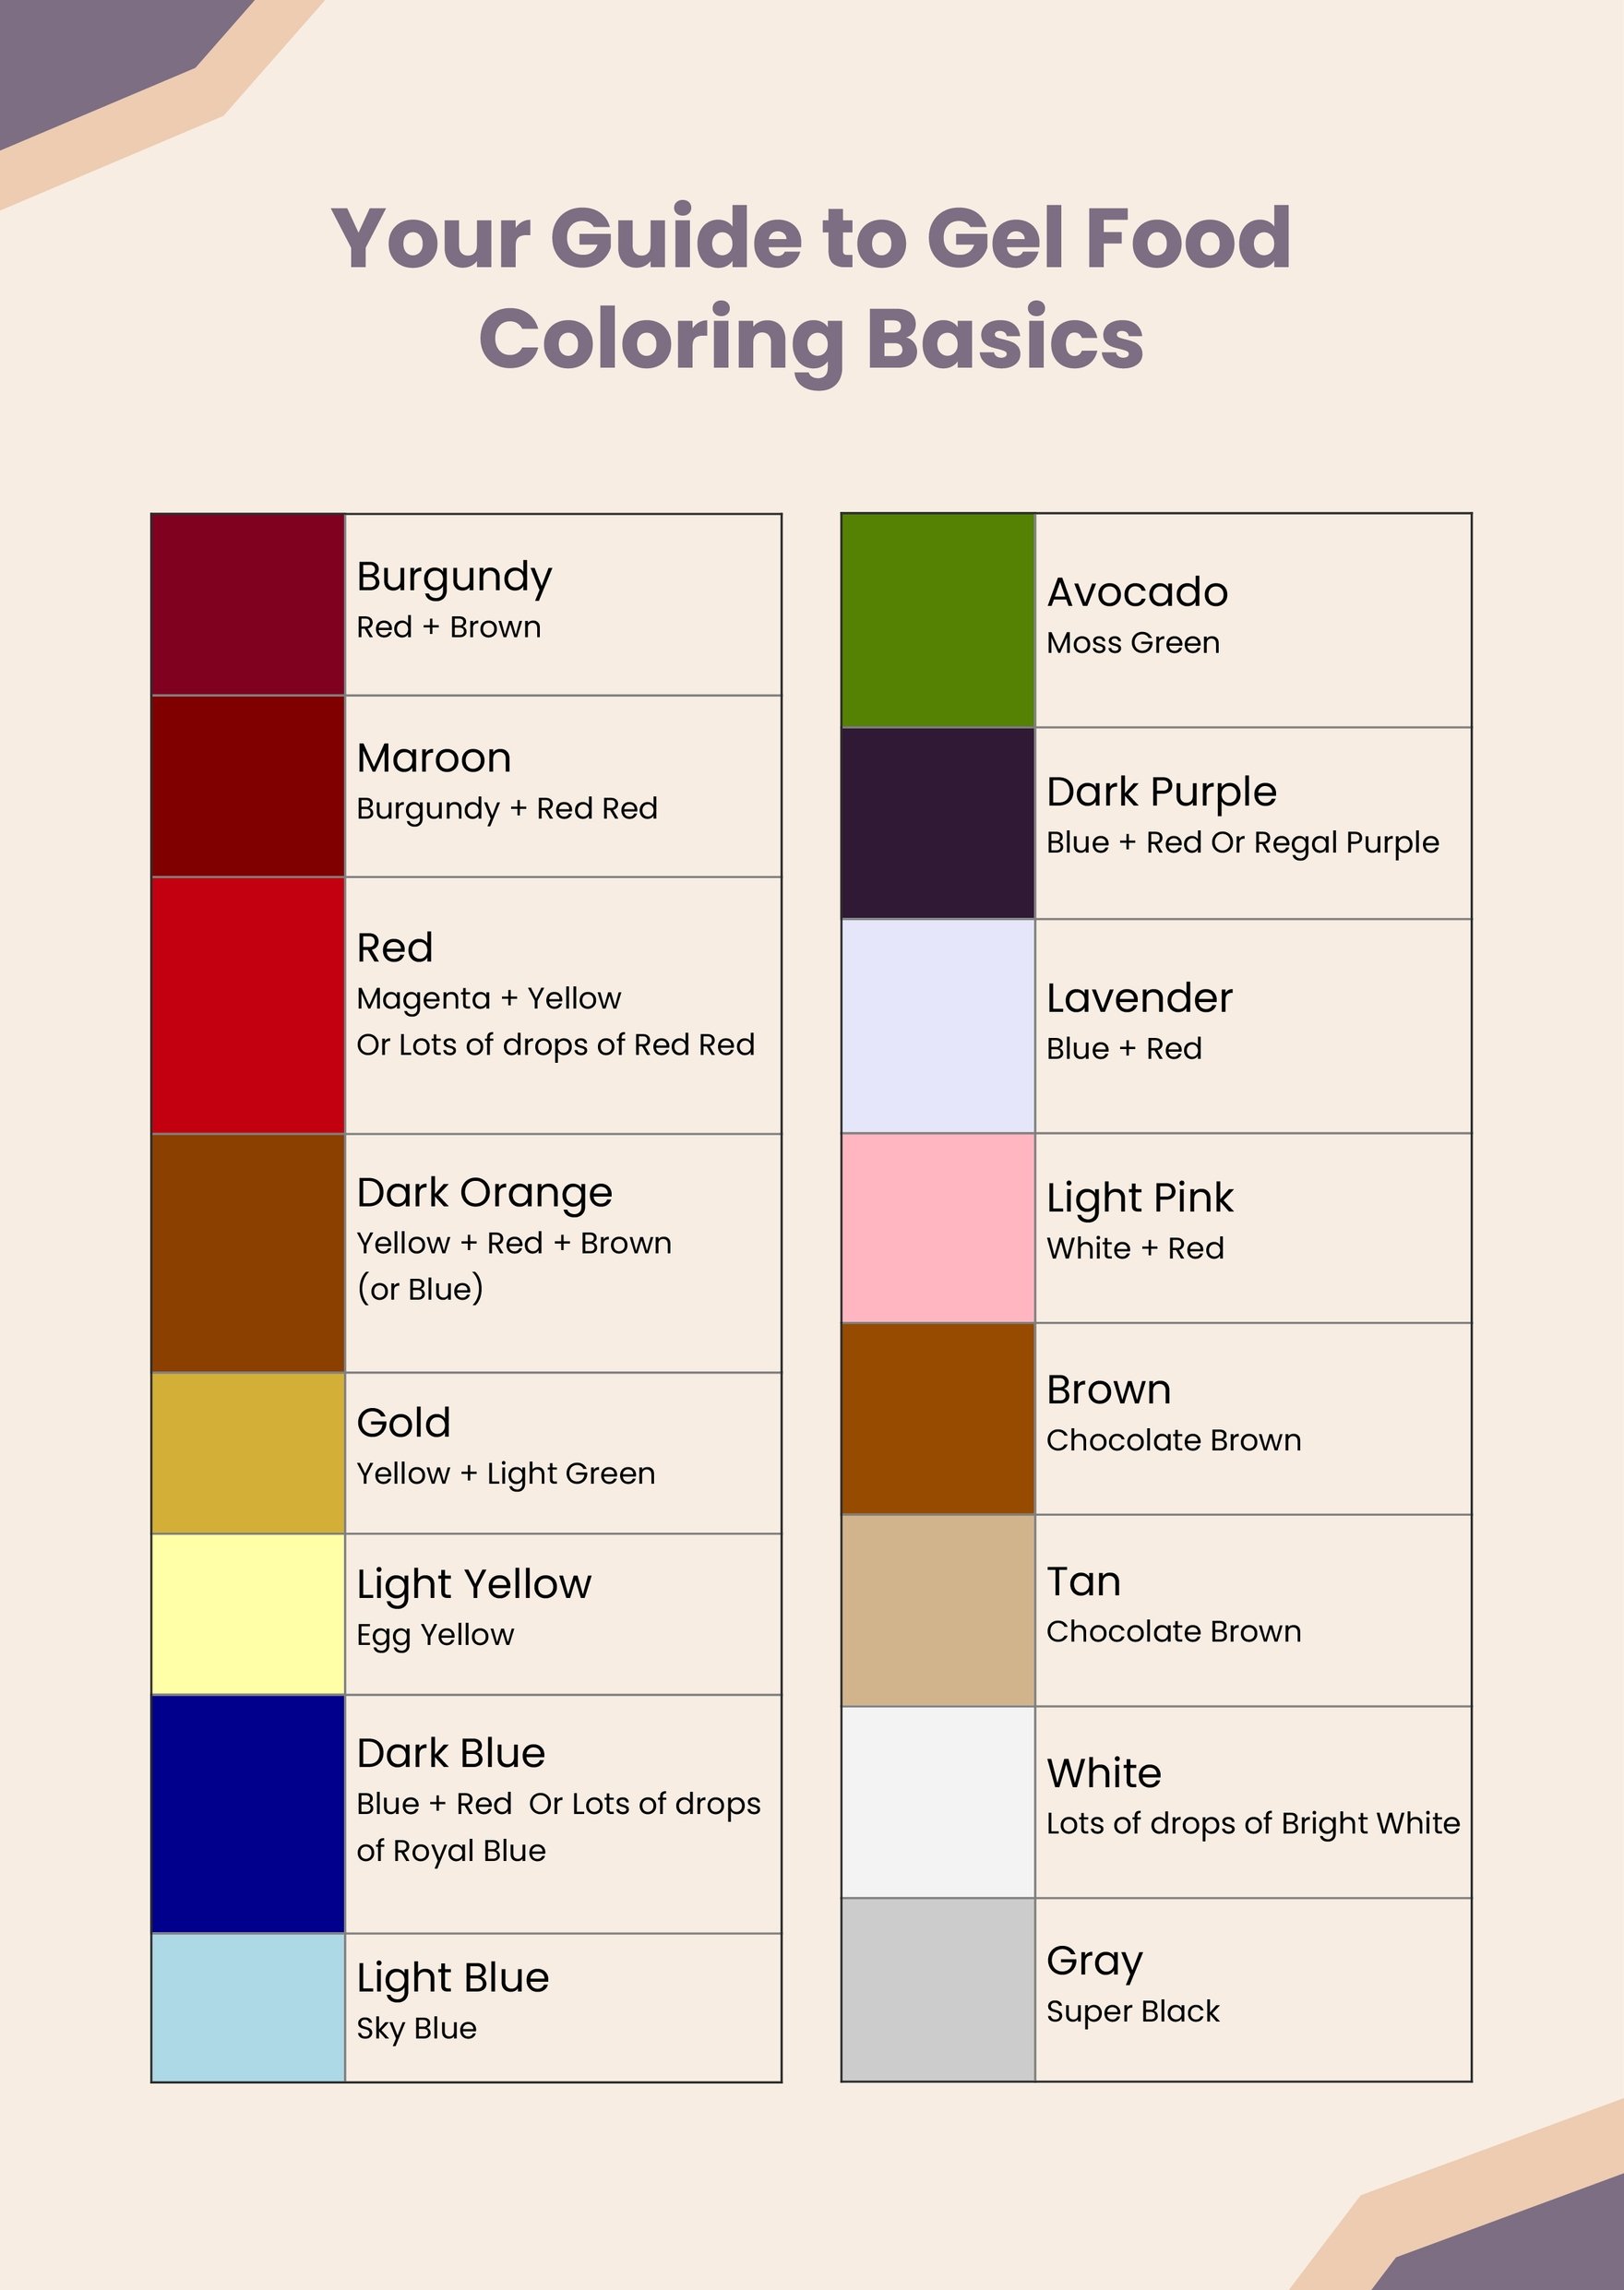 Free Basic Food Coloring Chart in PDF, Illustrator